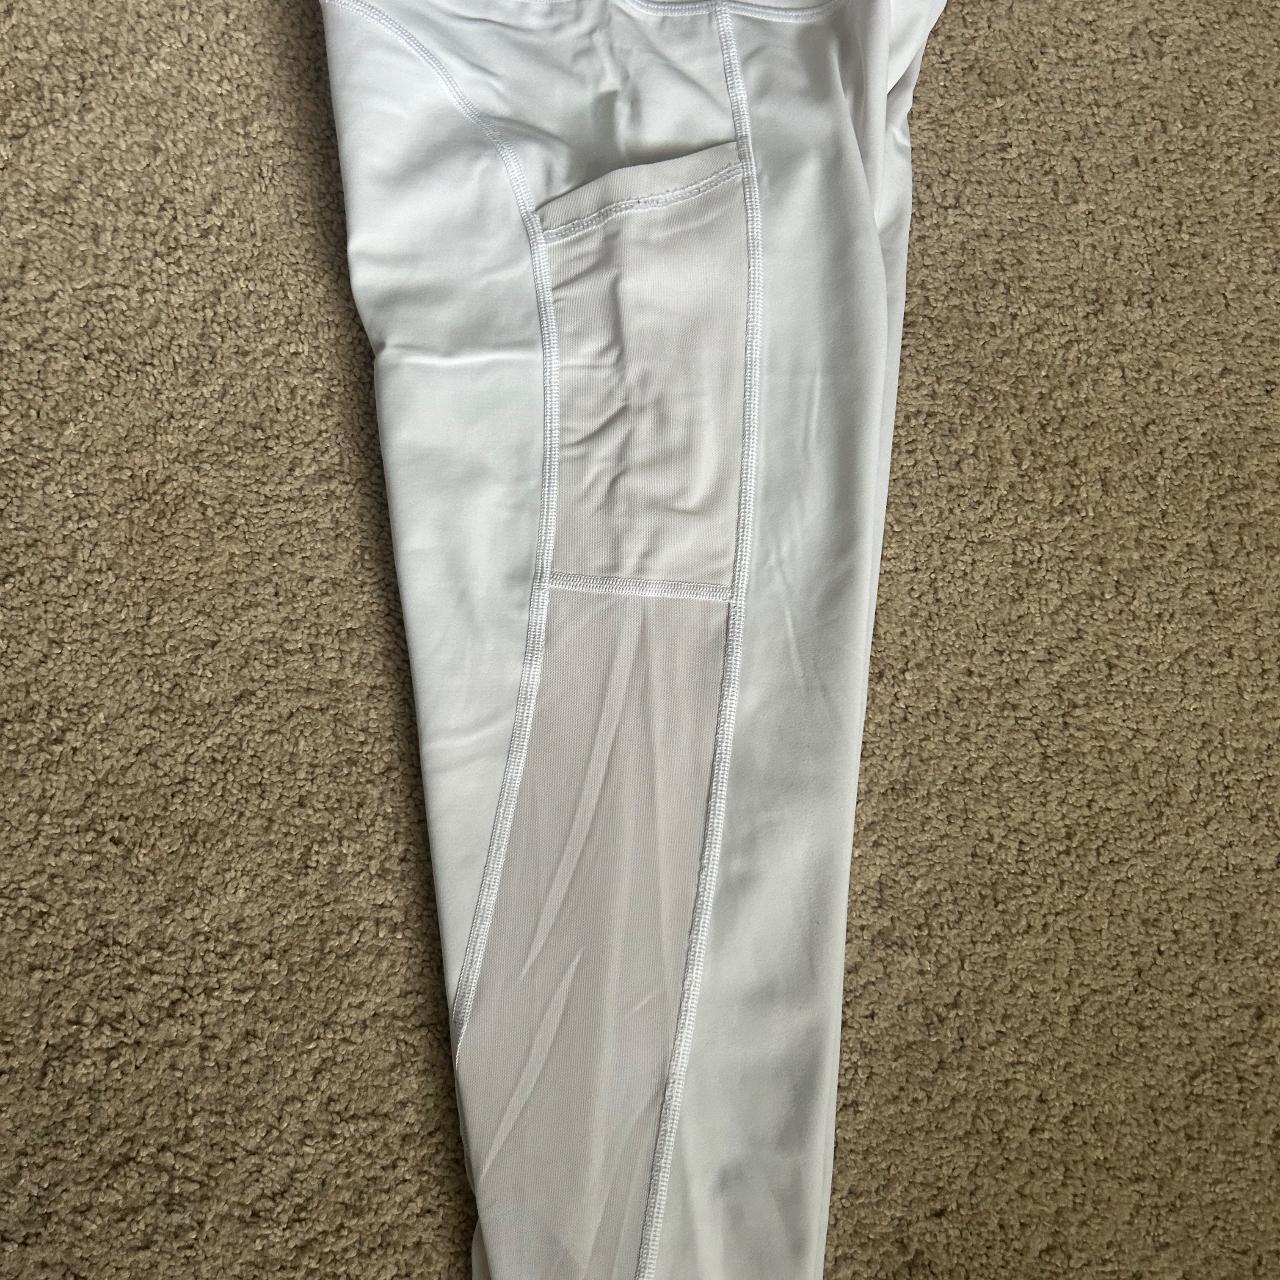 White Aerie Offline leggings with pockets on the - Depop